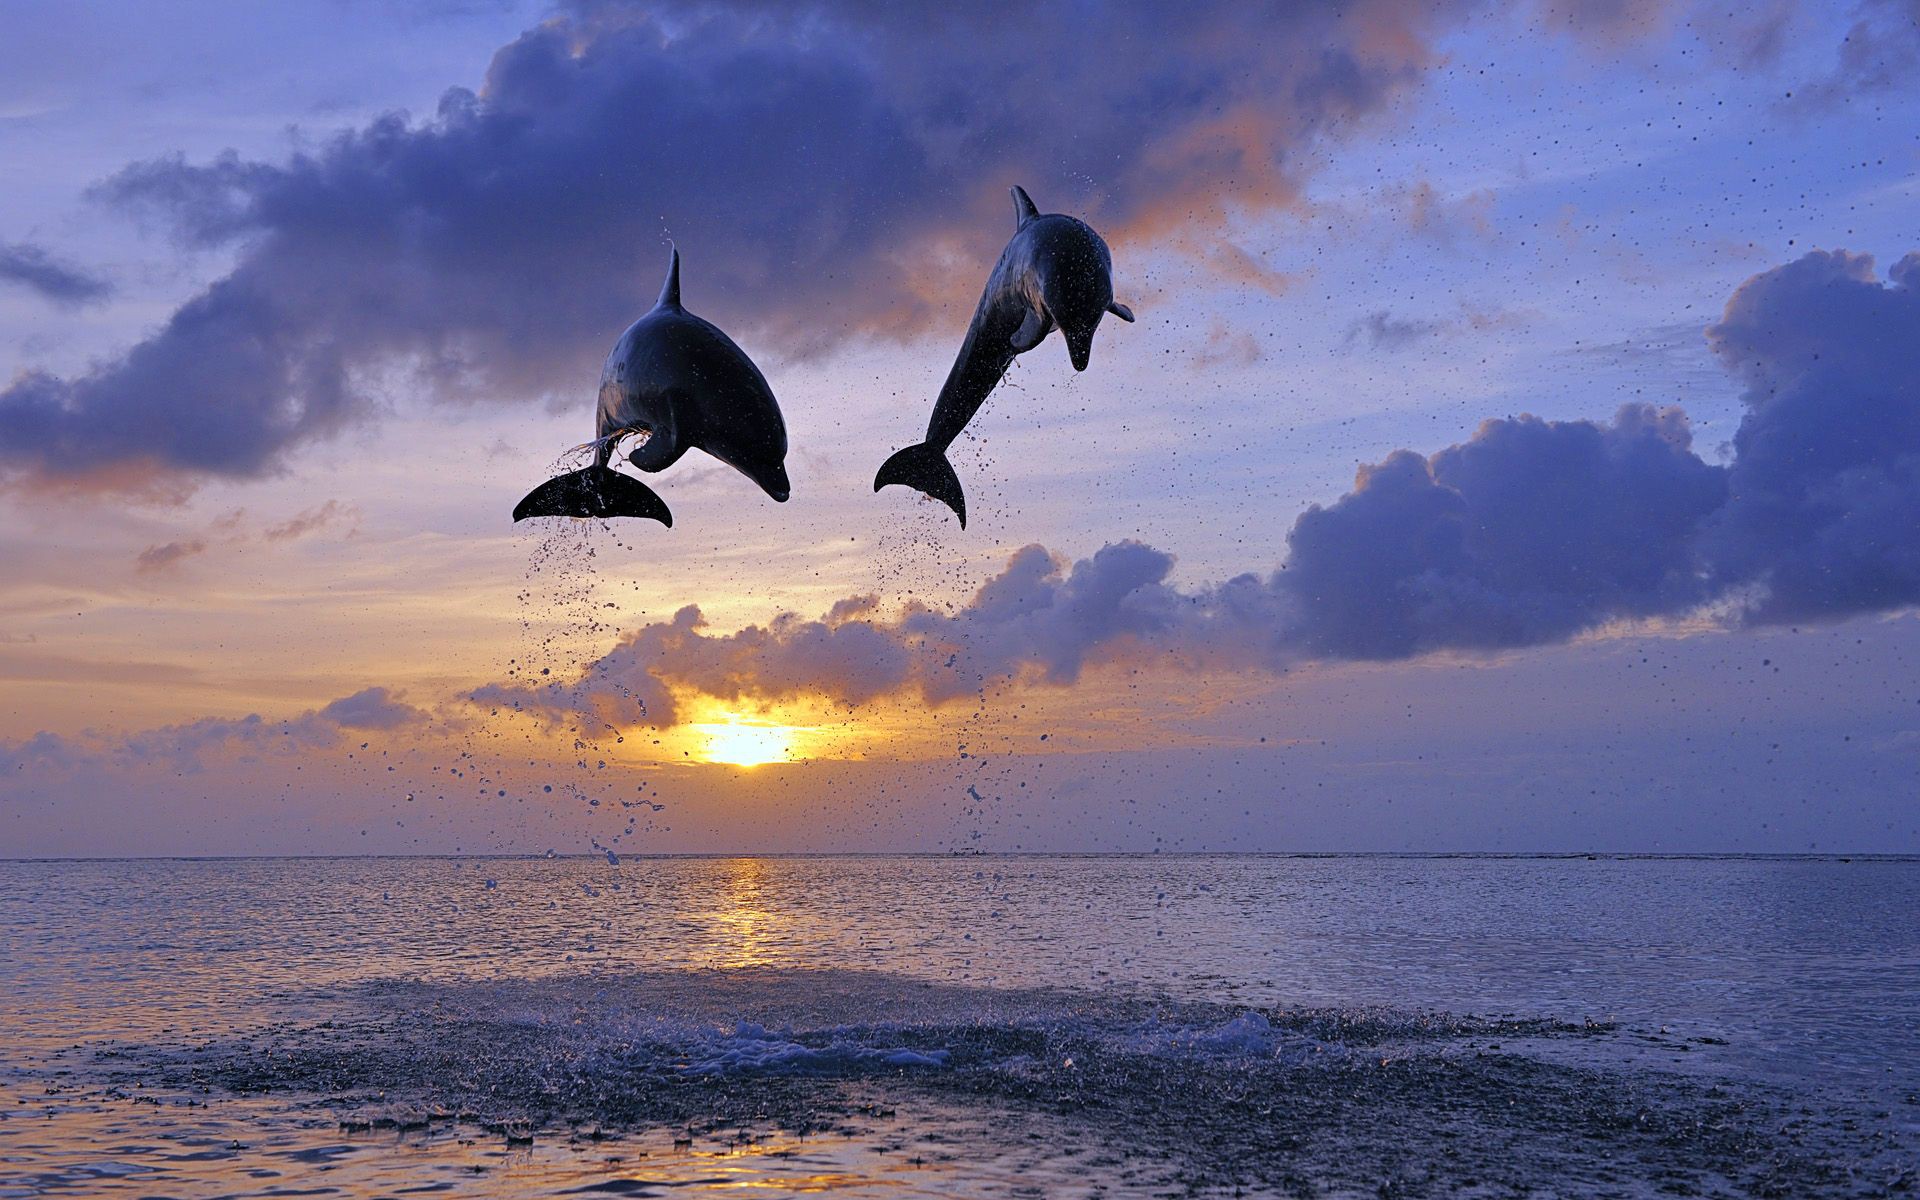 dolphins-sunbathing-sunrise-sunset-ocean-sky-mammals-water-nature-dolphins-cute-animals-clouds-wildlife-sea-wild-desktop-wallpapers.jpg